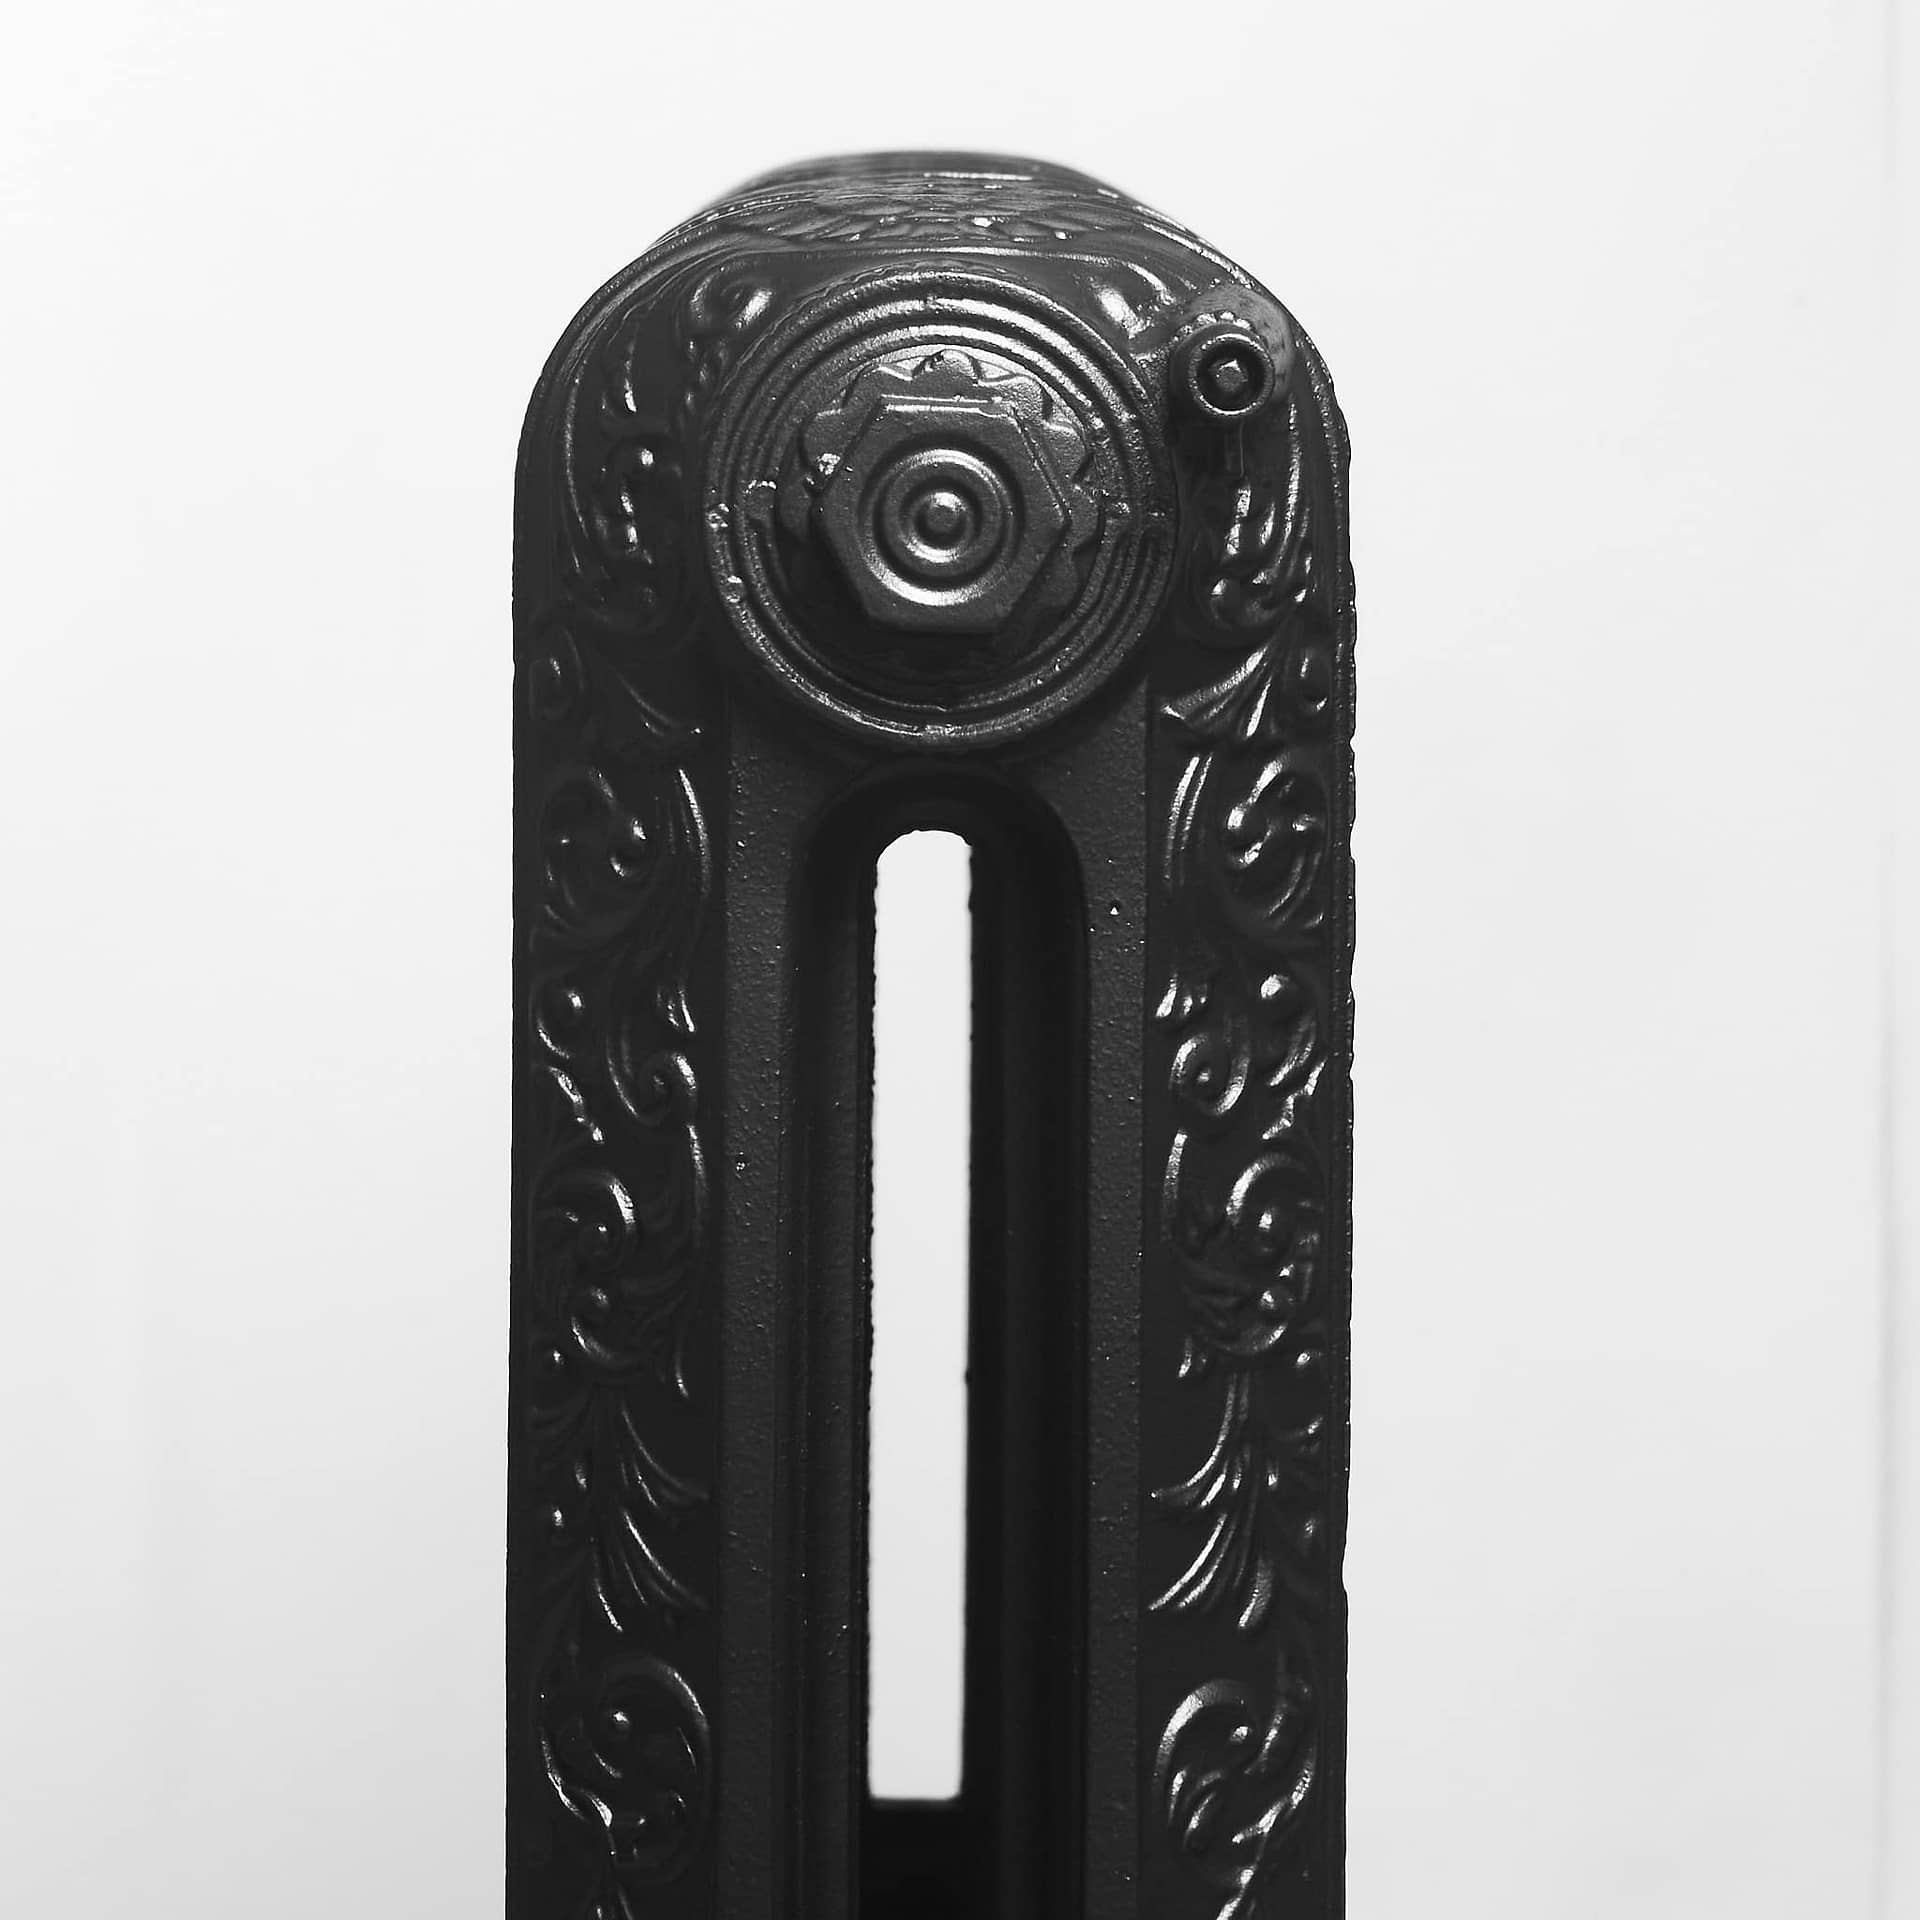 Detail of embossed cast iron radiator